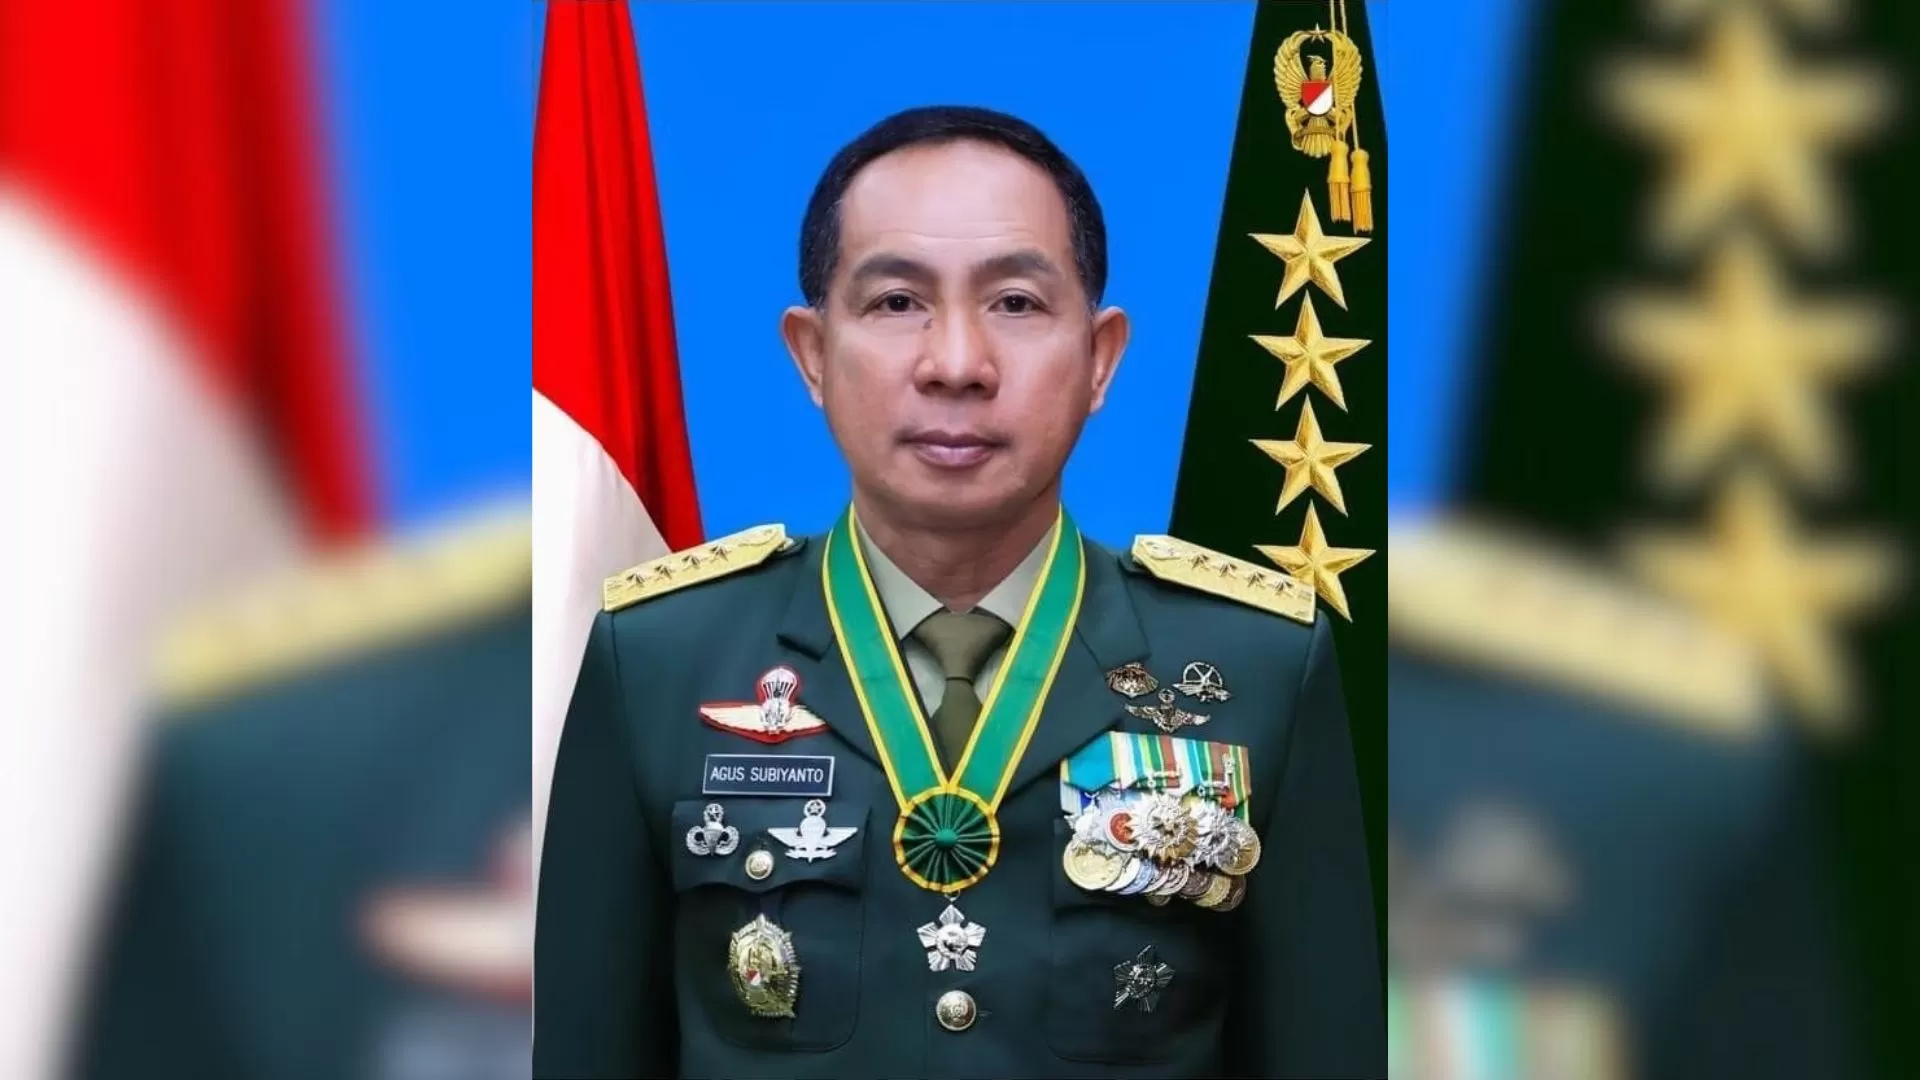 Profil Dan Biodata Jenderal Agus Subiyanto Calon Panglima Tni Berkala